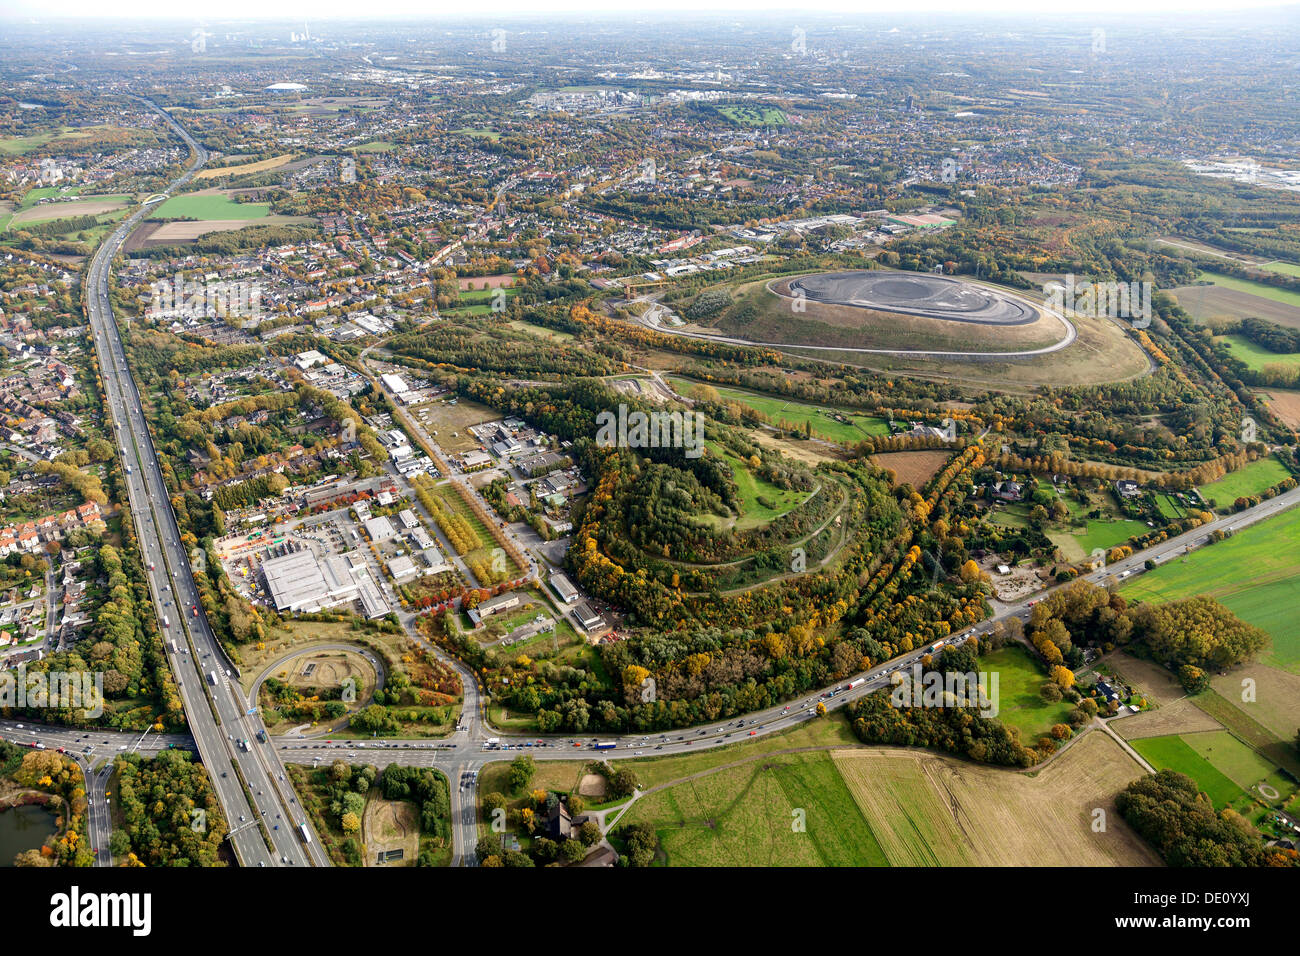 Vista aérea, B224, carretera, autopista A2, el despojo, consejos, Gladbeck, área de Ruhr, Renania del Norte-Westfalia Foto de stock